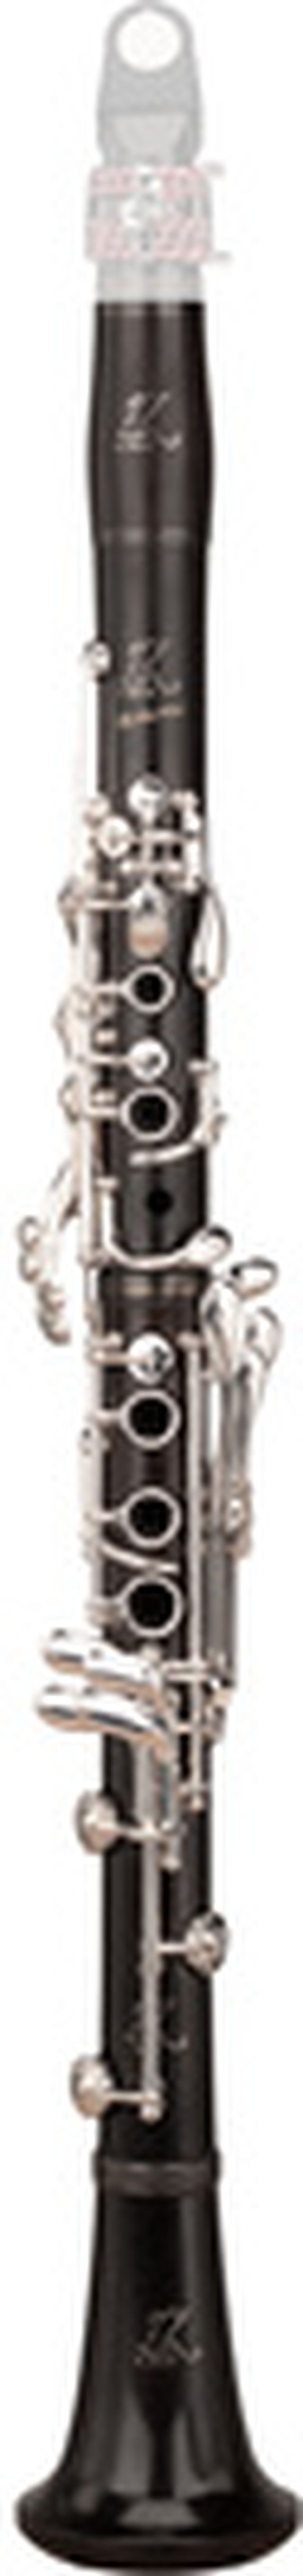 RZ Clarinets Bohema Bb-Clarinet 18/6